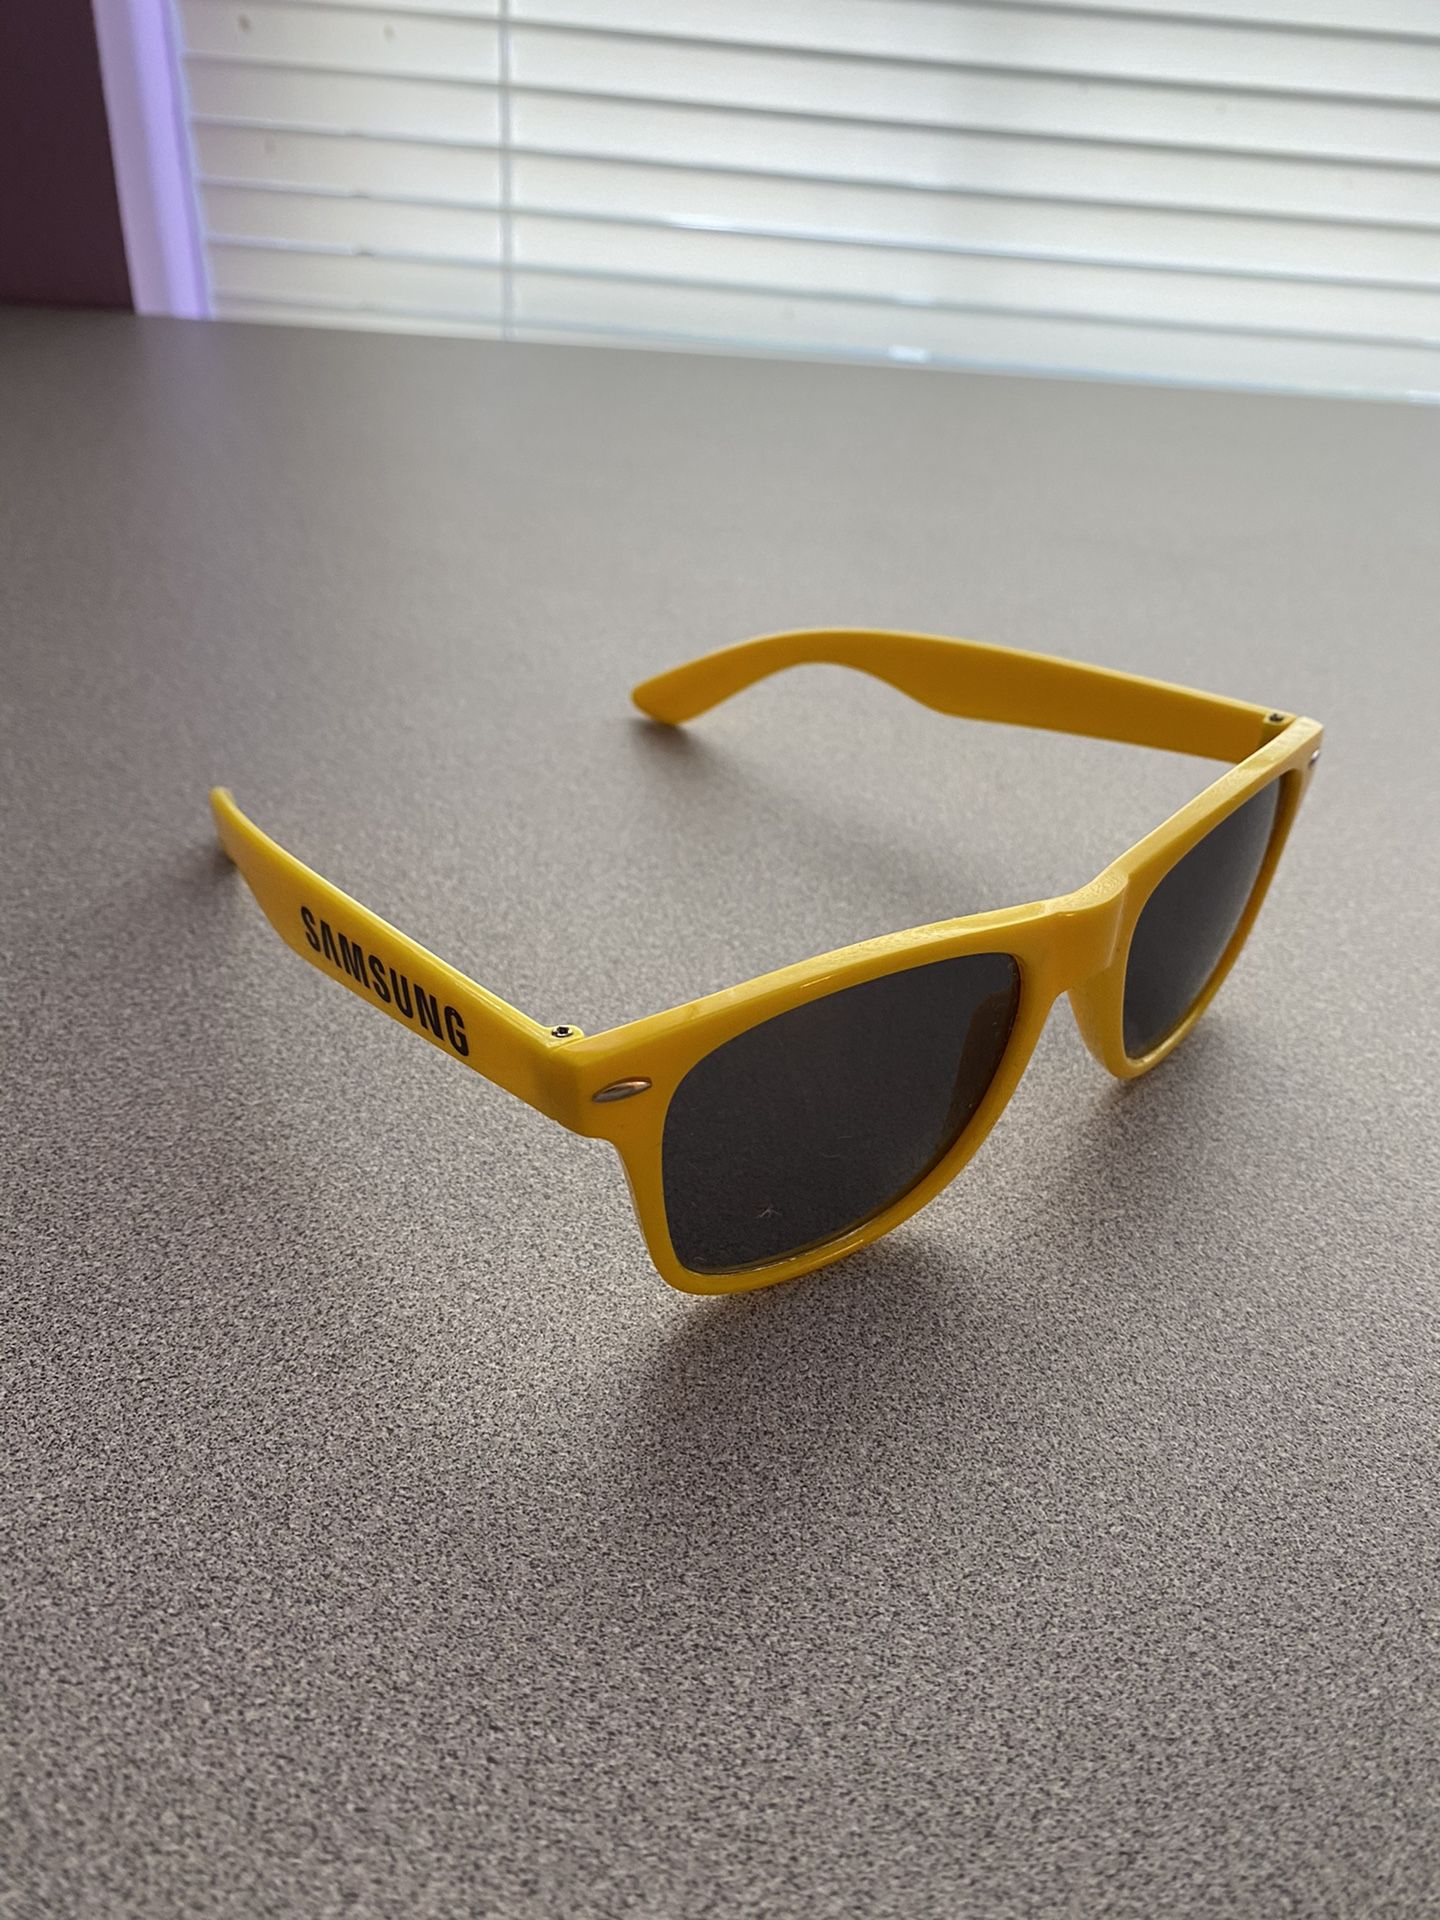 Samsung wayfarers sunglasses perfect!